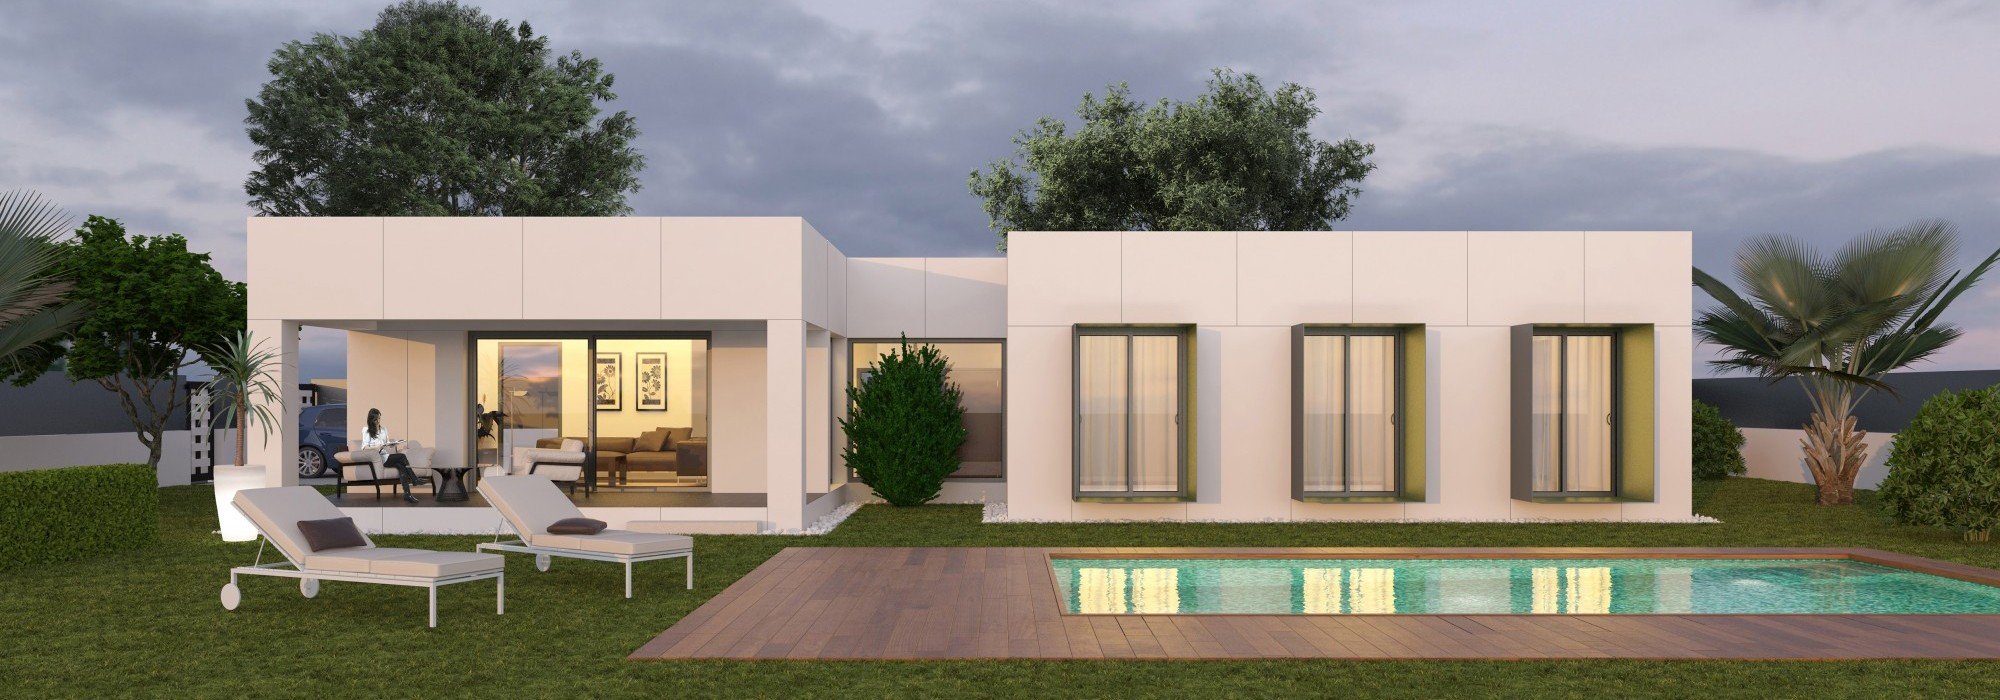 110 3D :: CATÁLOGO DE VIVIENDAS :: NUÑO ARQUITECTURA  Arquitectura sostenible diseñada para tí